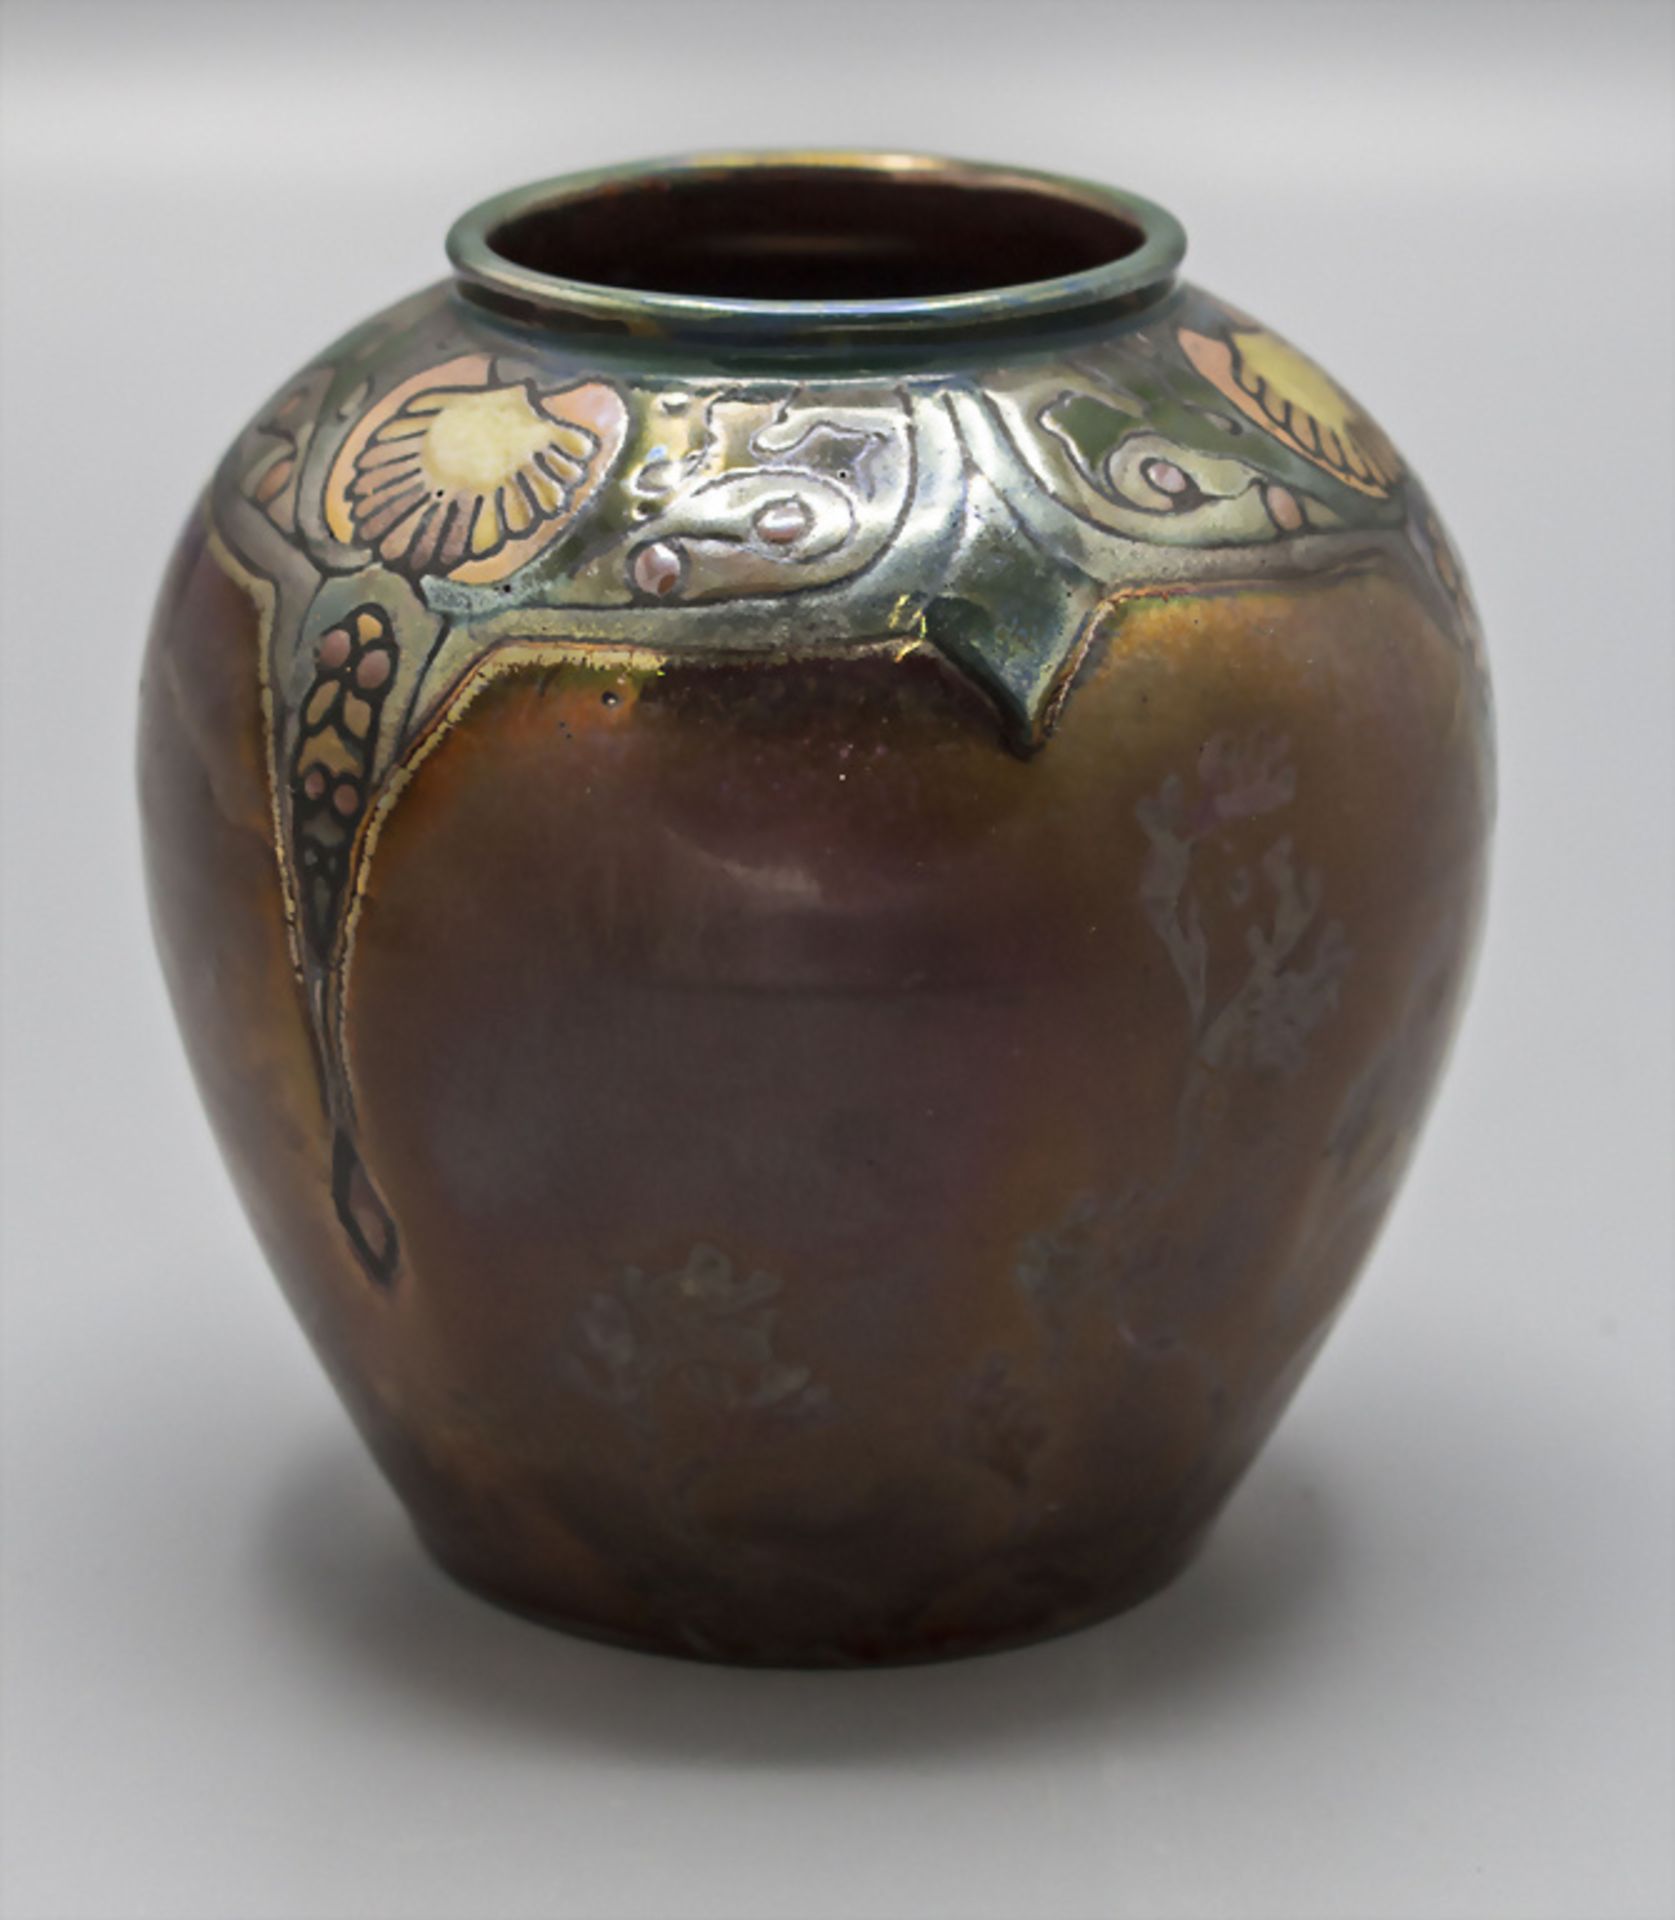 Jugendstil Vase mit Muscheln und Algen / An Art Nouveau vase with shells and seaweed, ... - Image 2 of 5